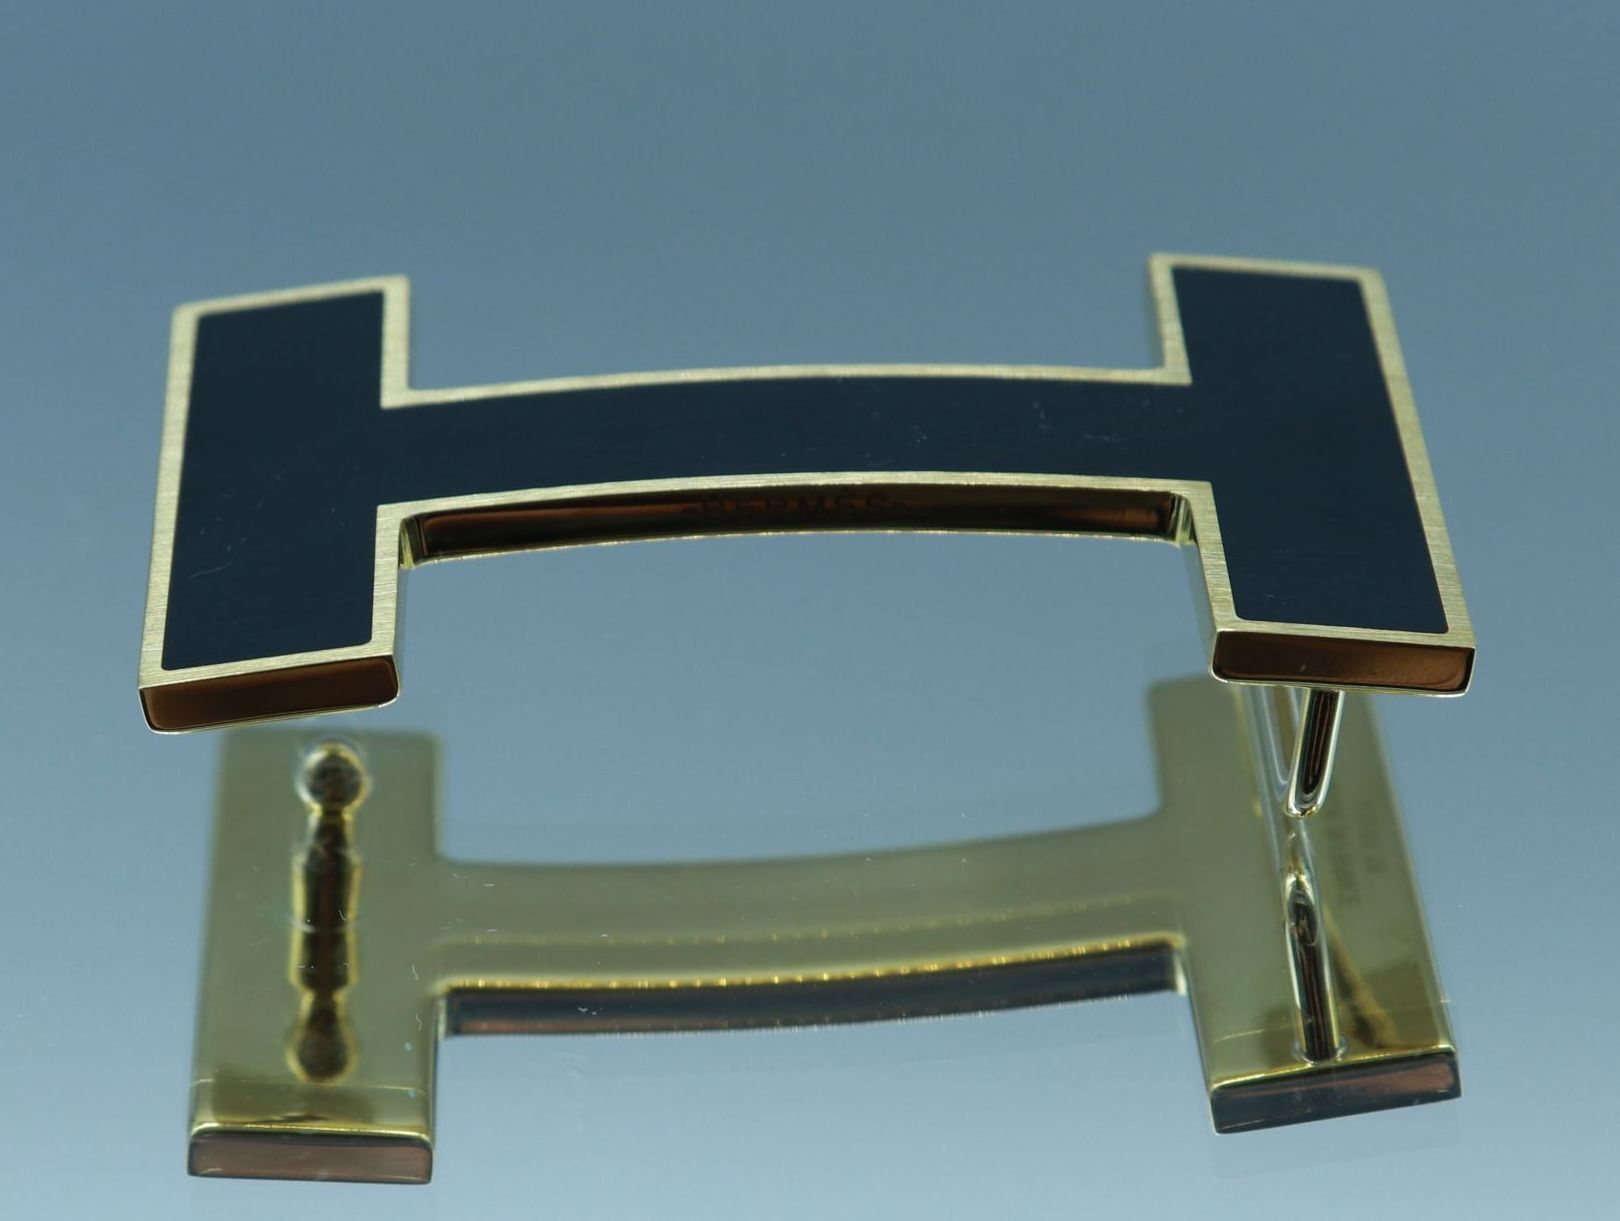 Null HERMES 法国制造

皮带扣H为哑光黑色拉丝金属，环状物为镀金金属。尺寸：3.5 x 6 cm

(装在一个小袋子里)



抽签将于2021年1&hellip;